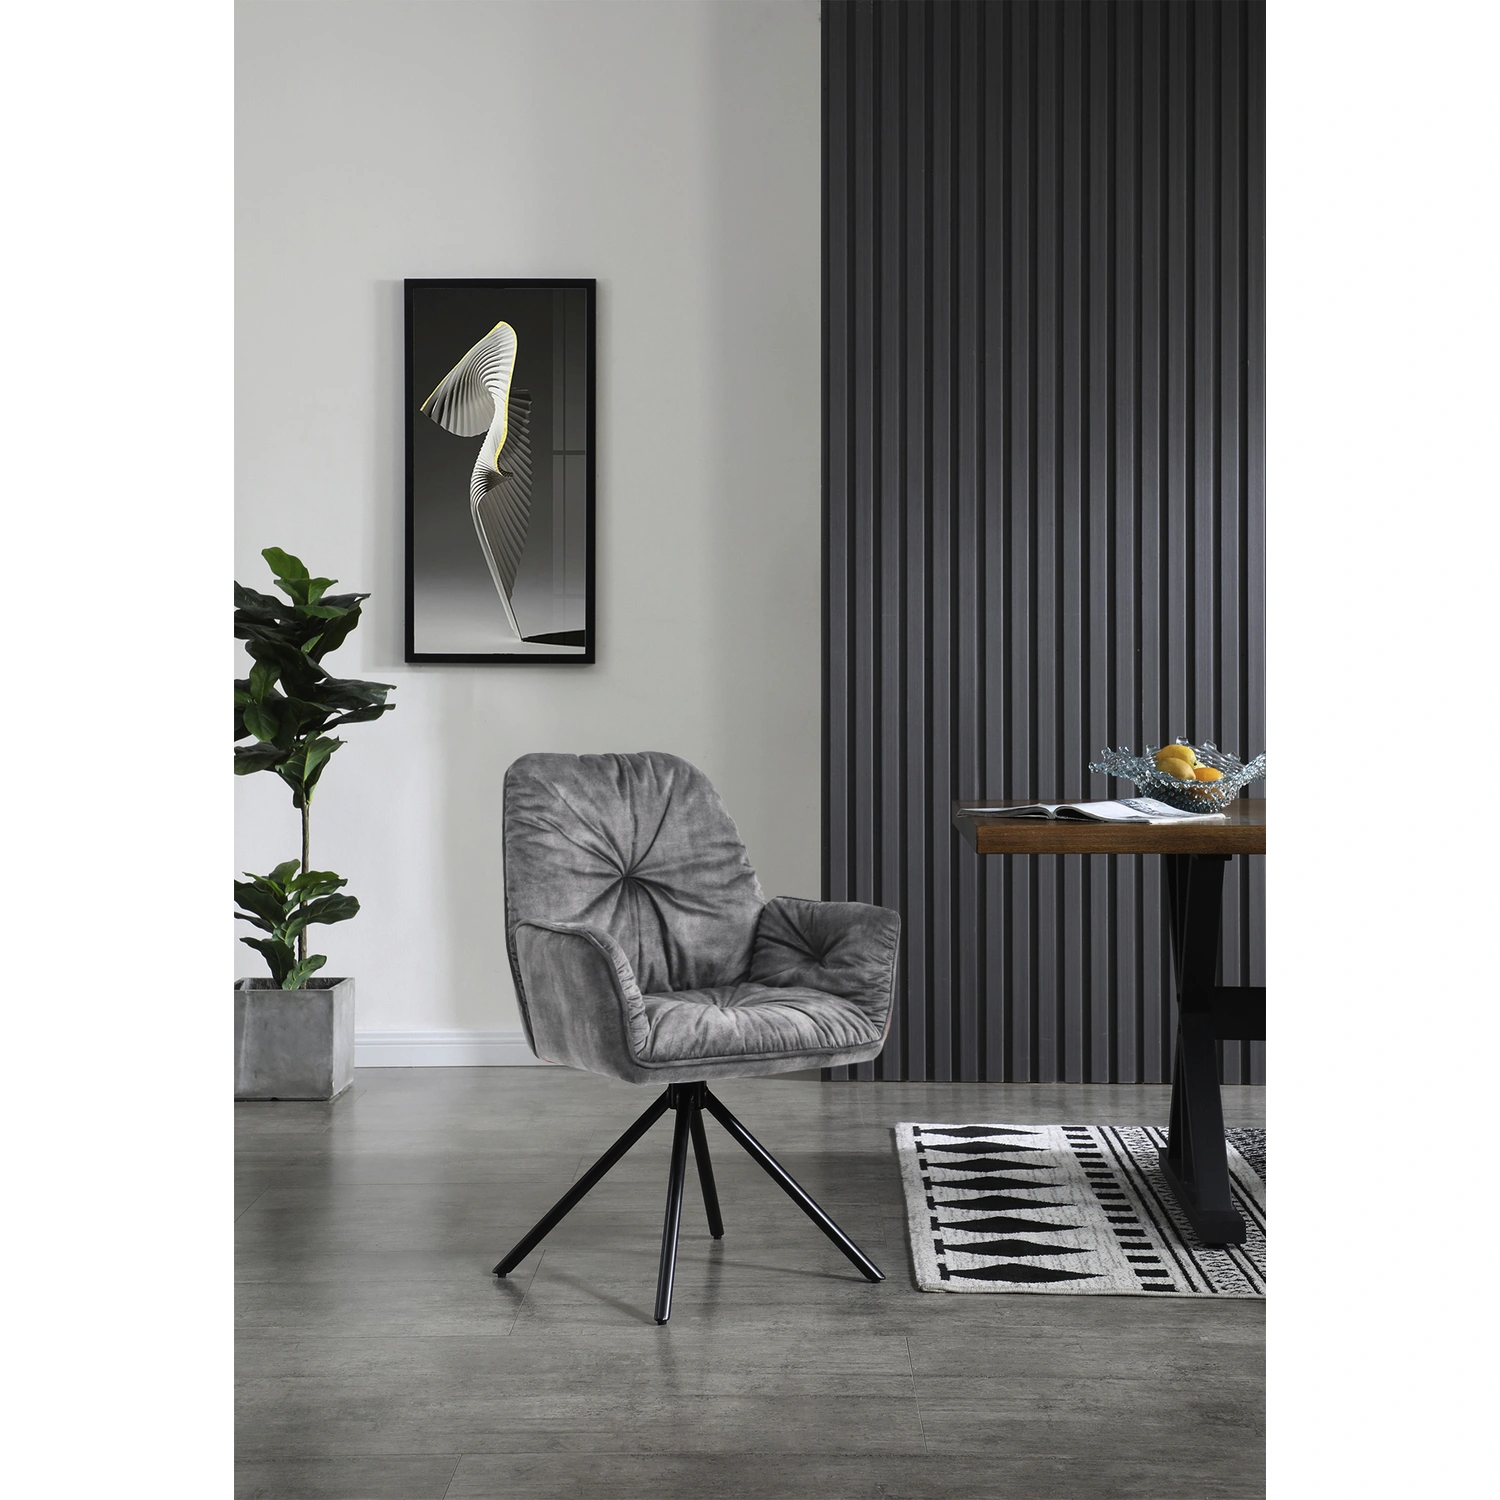 SalesFever Stuhl, Höhe: 90 cm, grau/schwarz